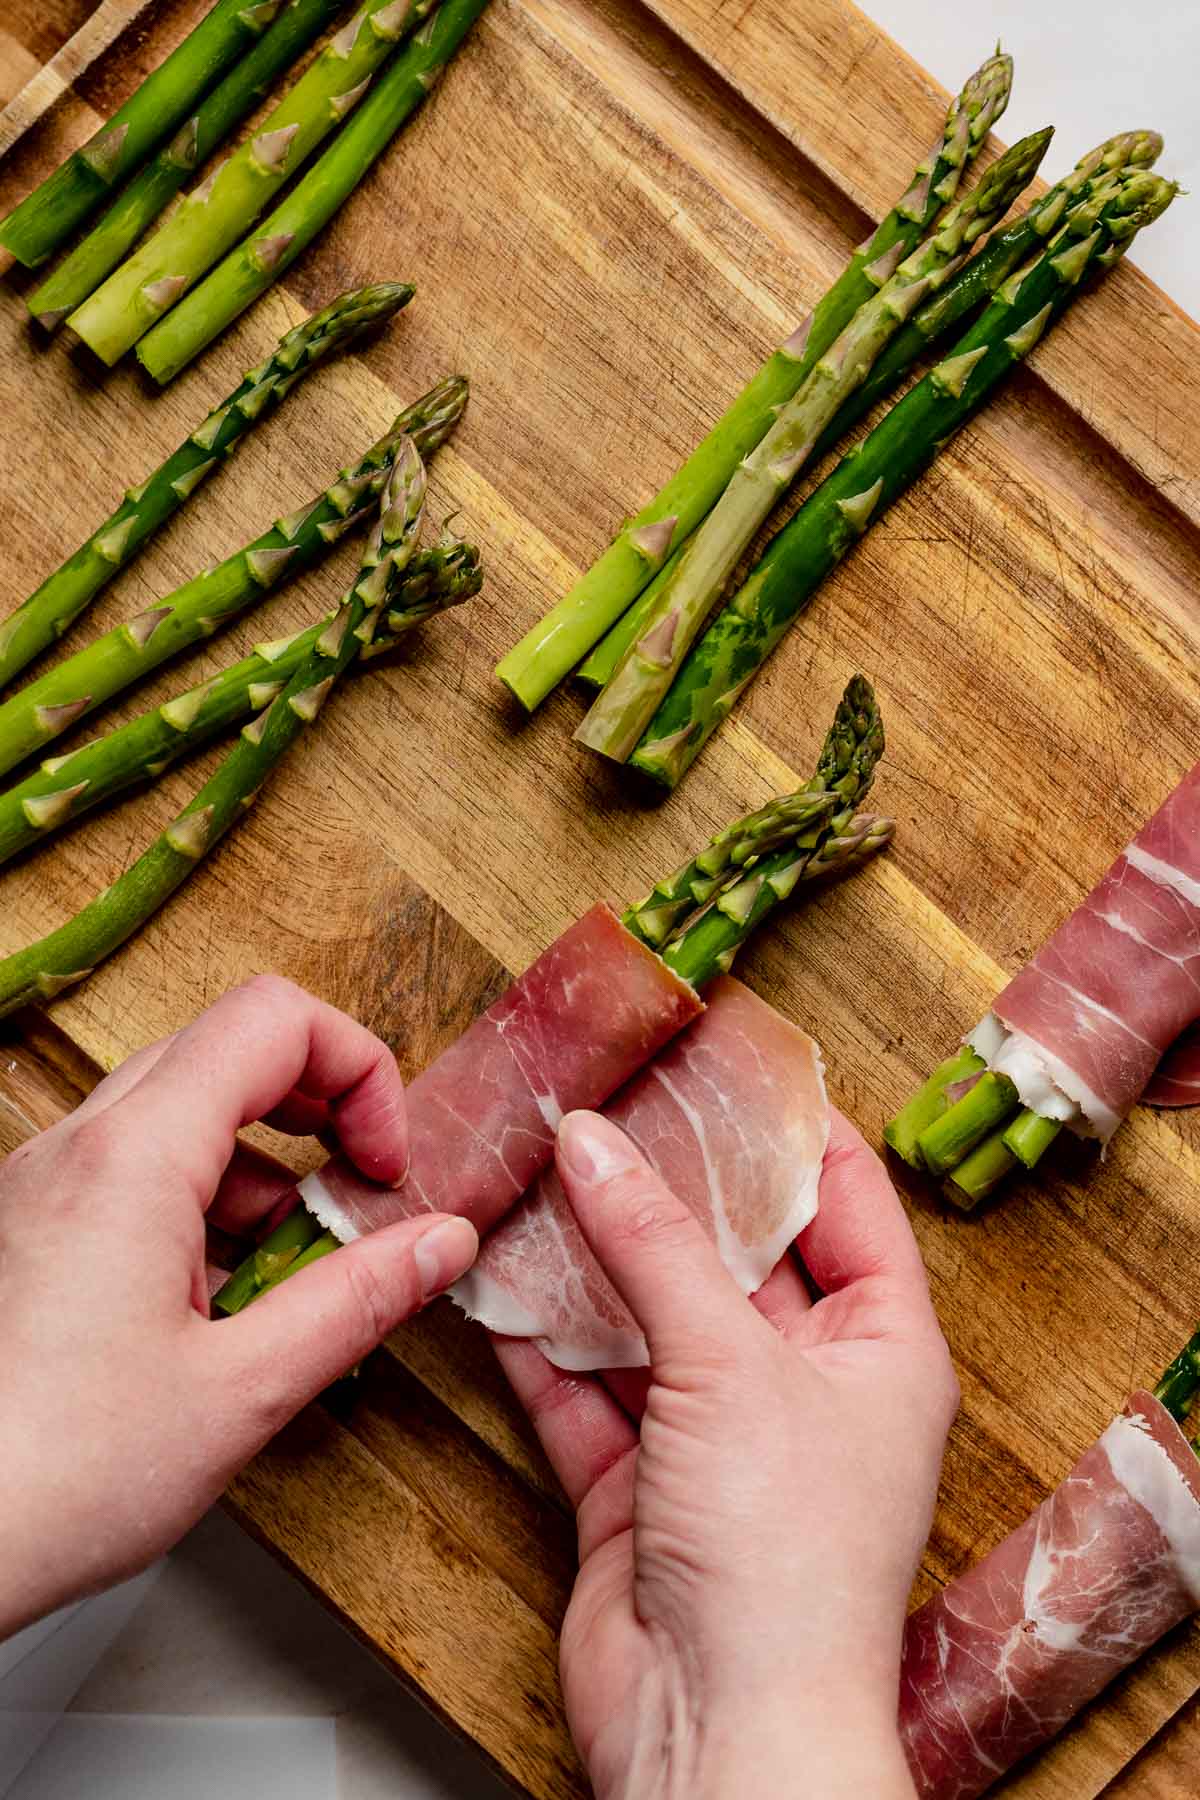 Wrapping prosciutto around asparagus bundles.